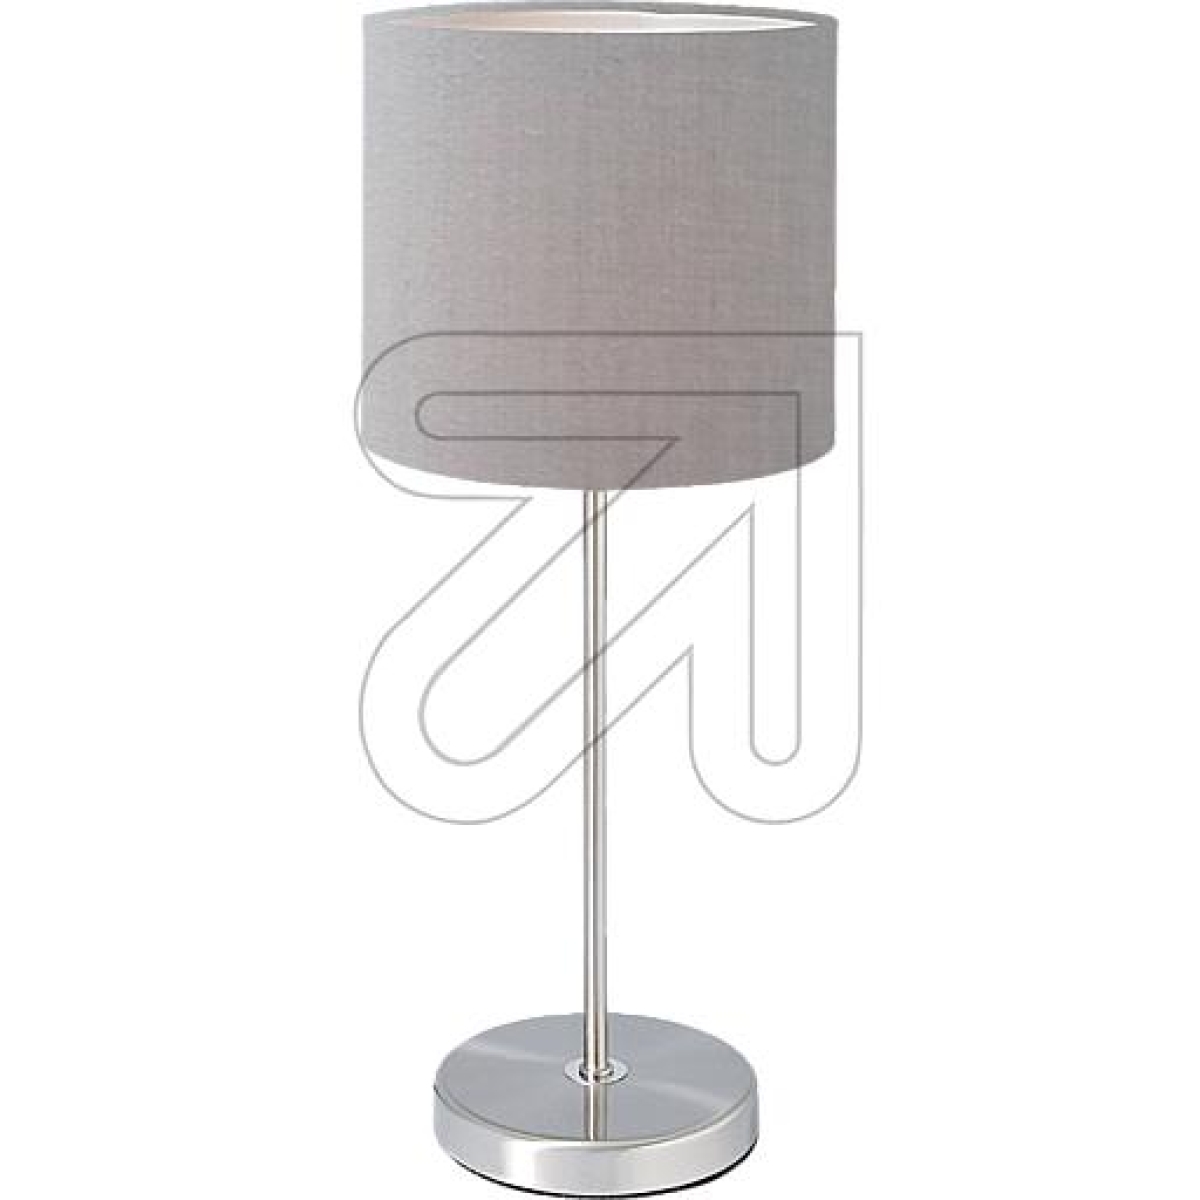 NäveTextile table lamp gray 3112016Article-No: 676710